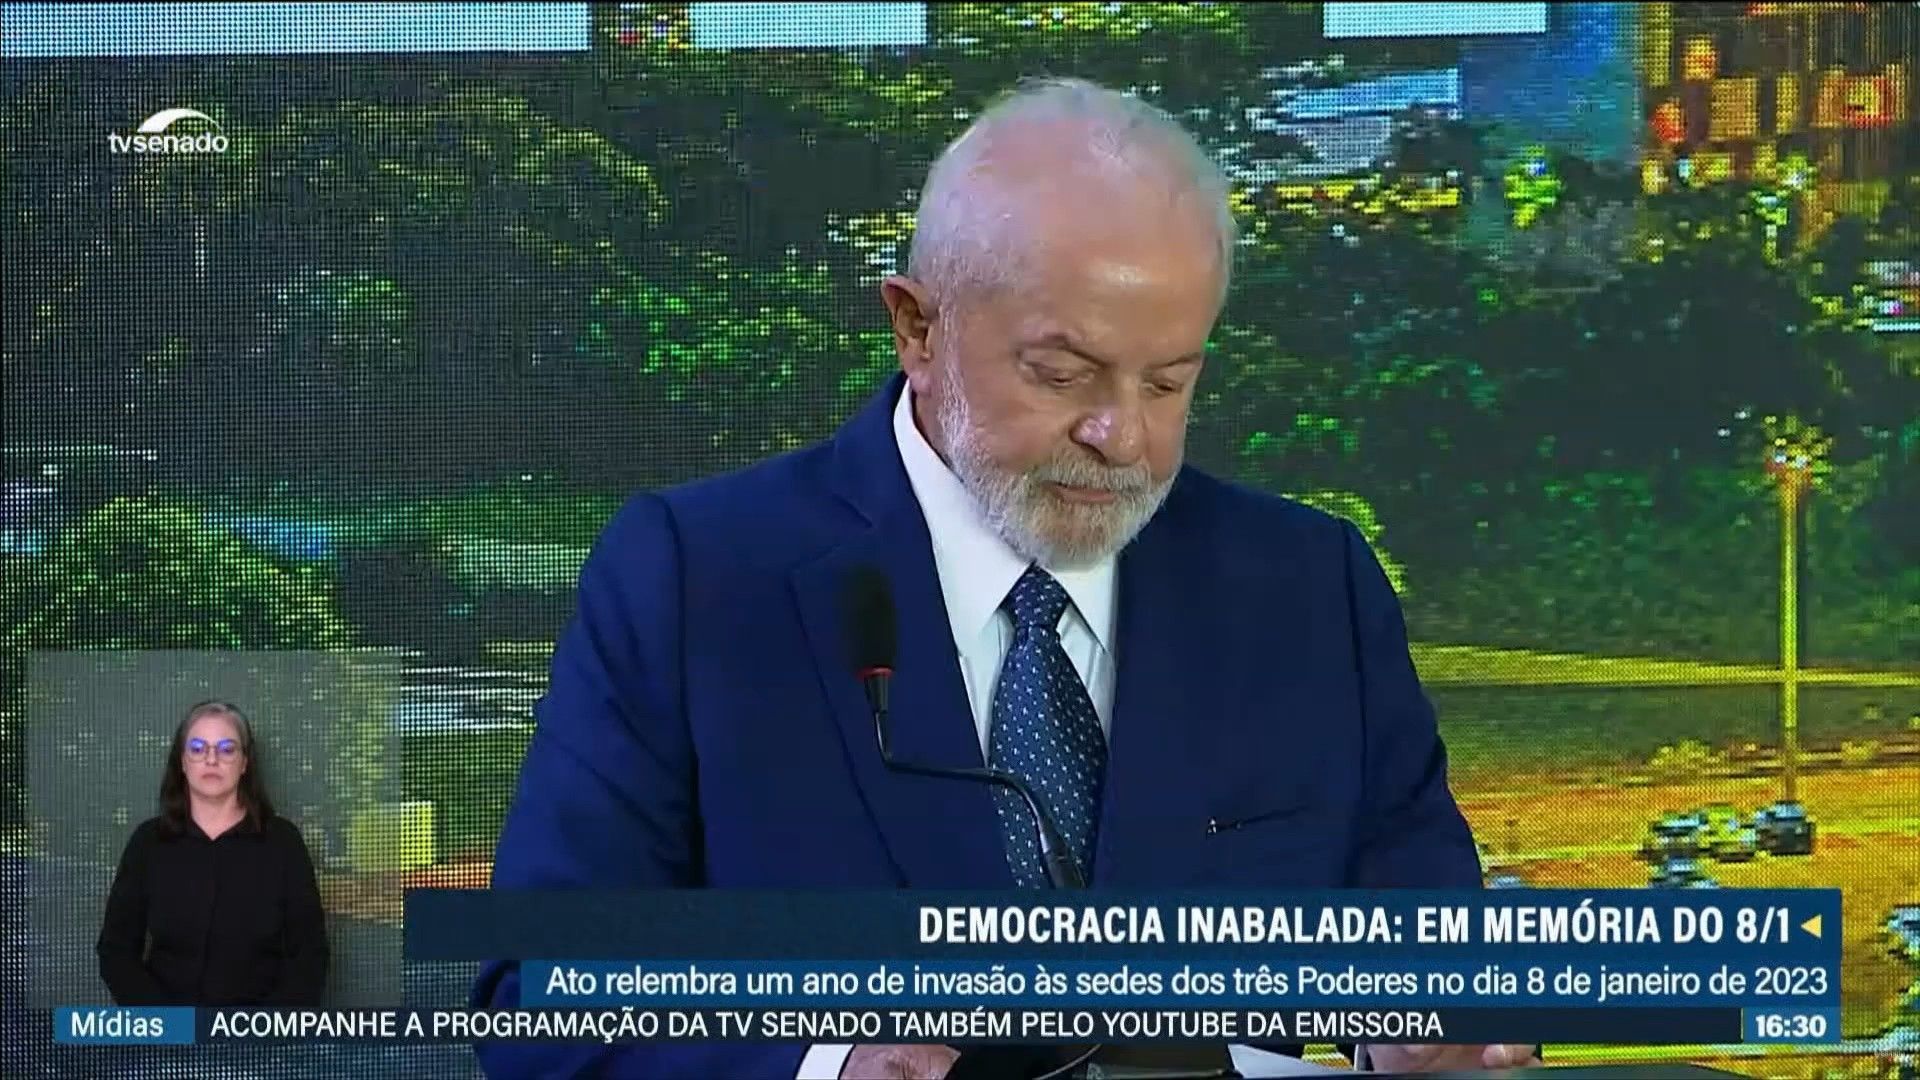 Lula marks first anniversary of Brazil capital riots